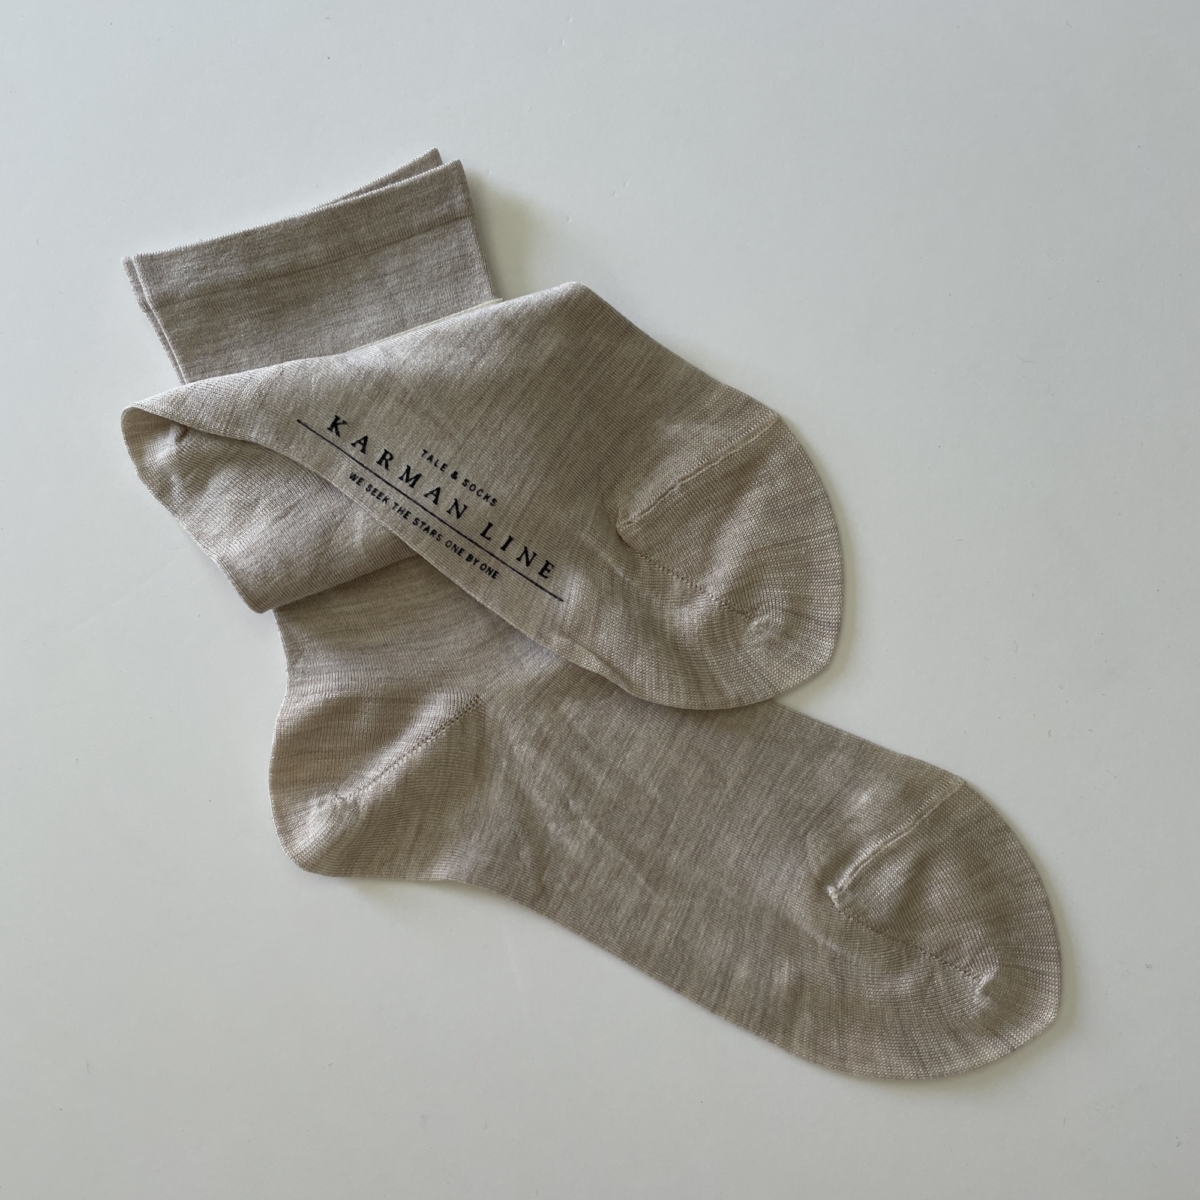 KARMAN LINE CANCER / socks / Ecru